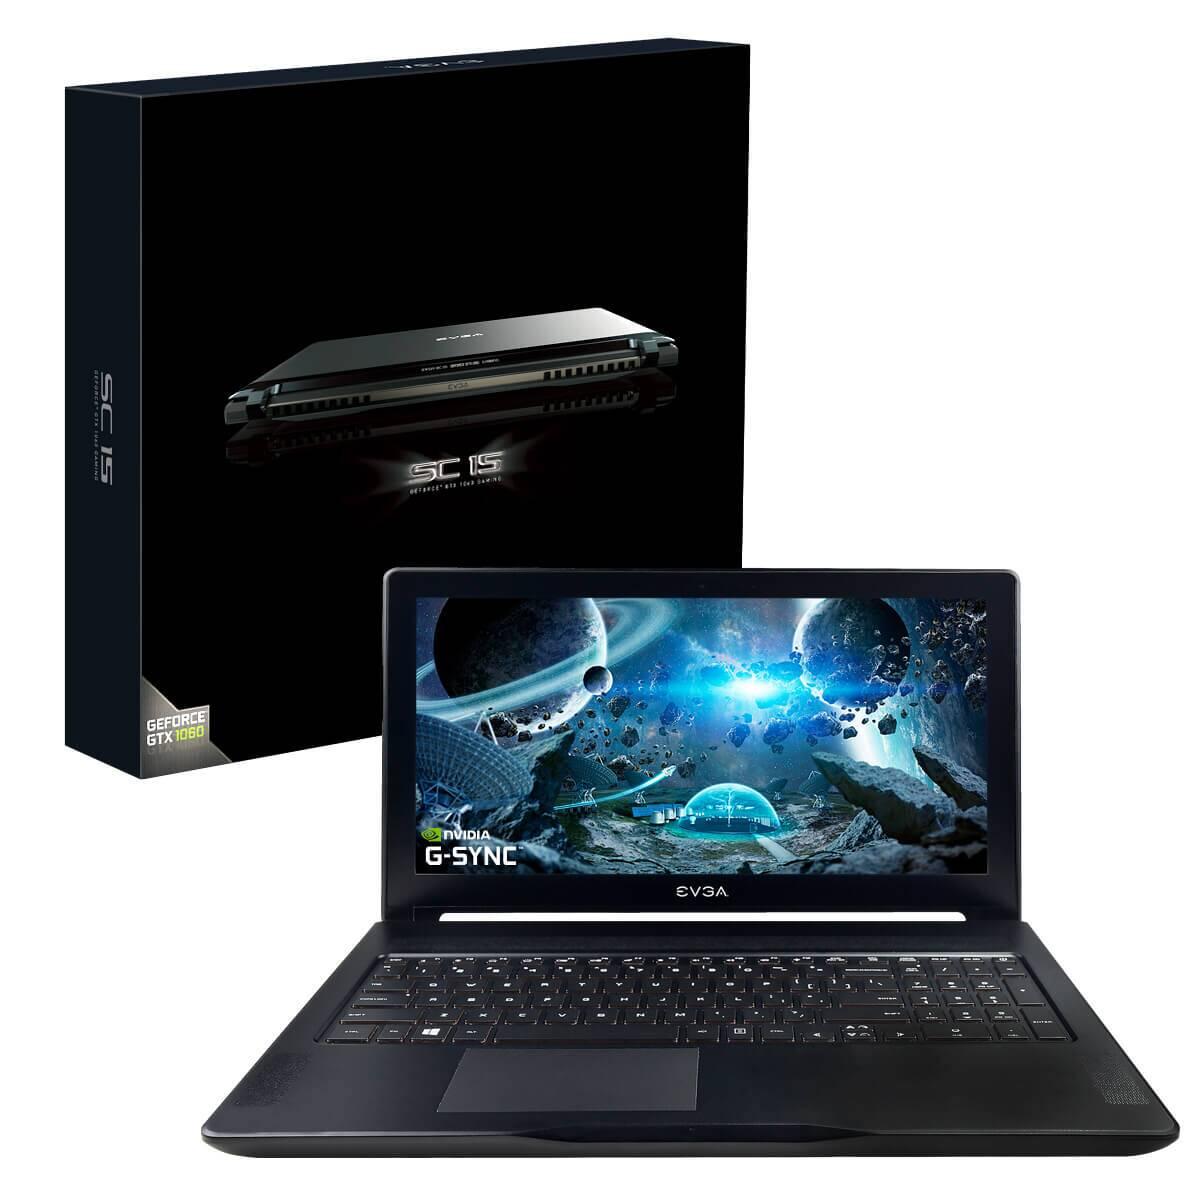 underkjole overvældende Lys EVGA SC15 Geforce GTX 1060 Gaming Laptop | Thunderbolt Technology Community